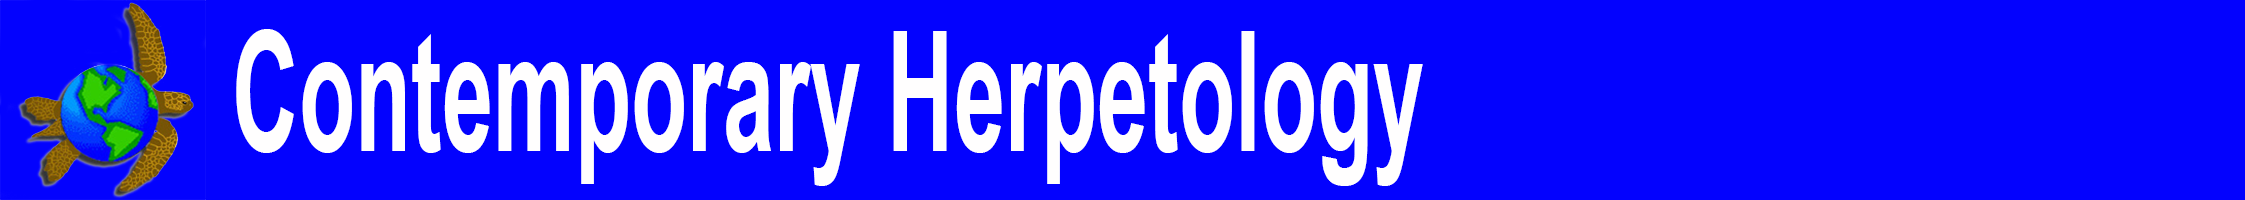 Contemporary Herpetology logo - sea turtle